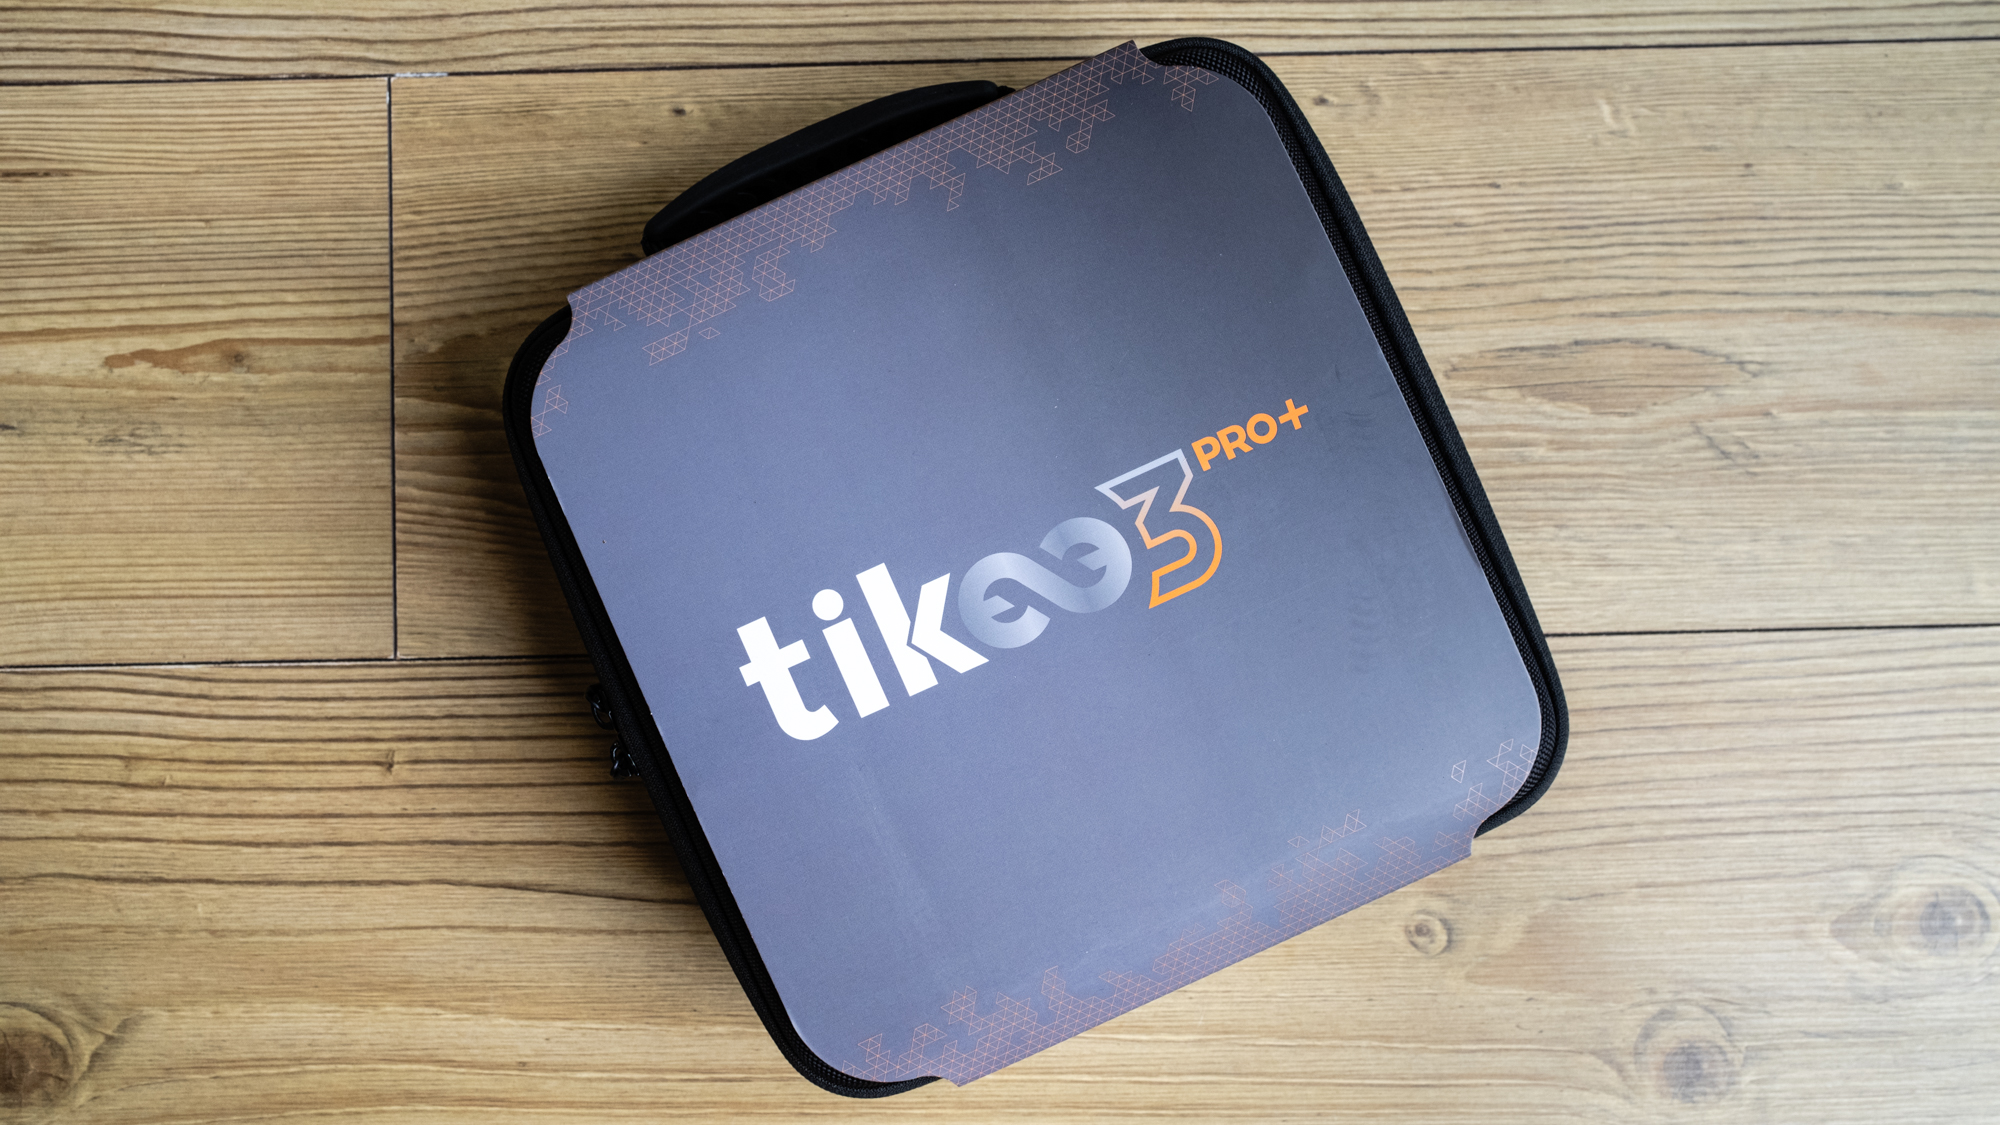 Enlaps Tikee 3 Pro+ time-lapse camera